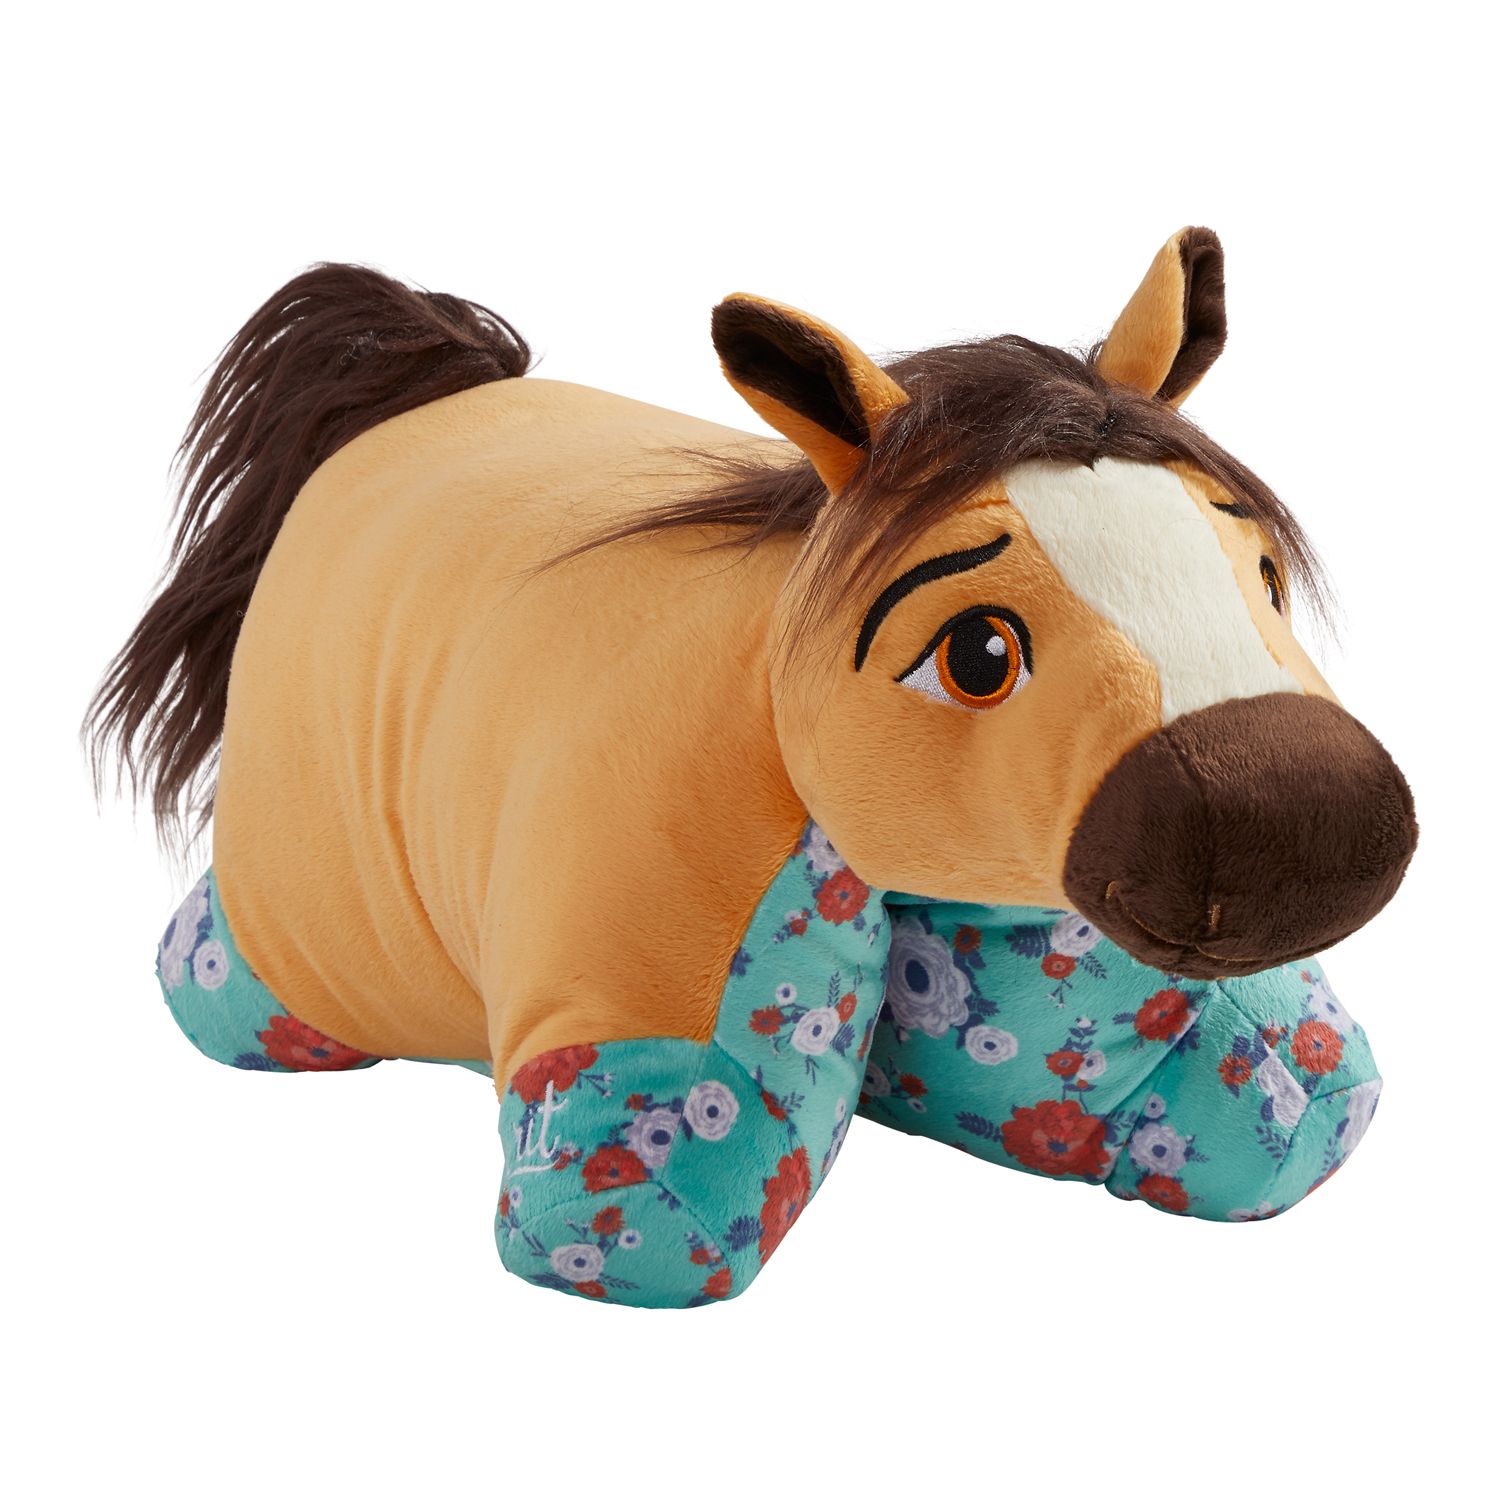 spirit stuffed horse